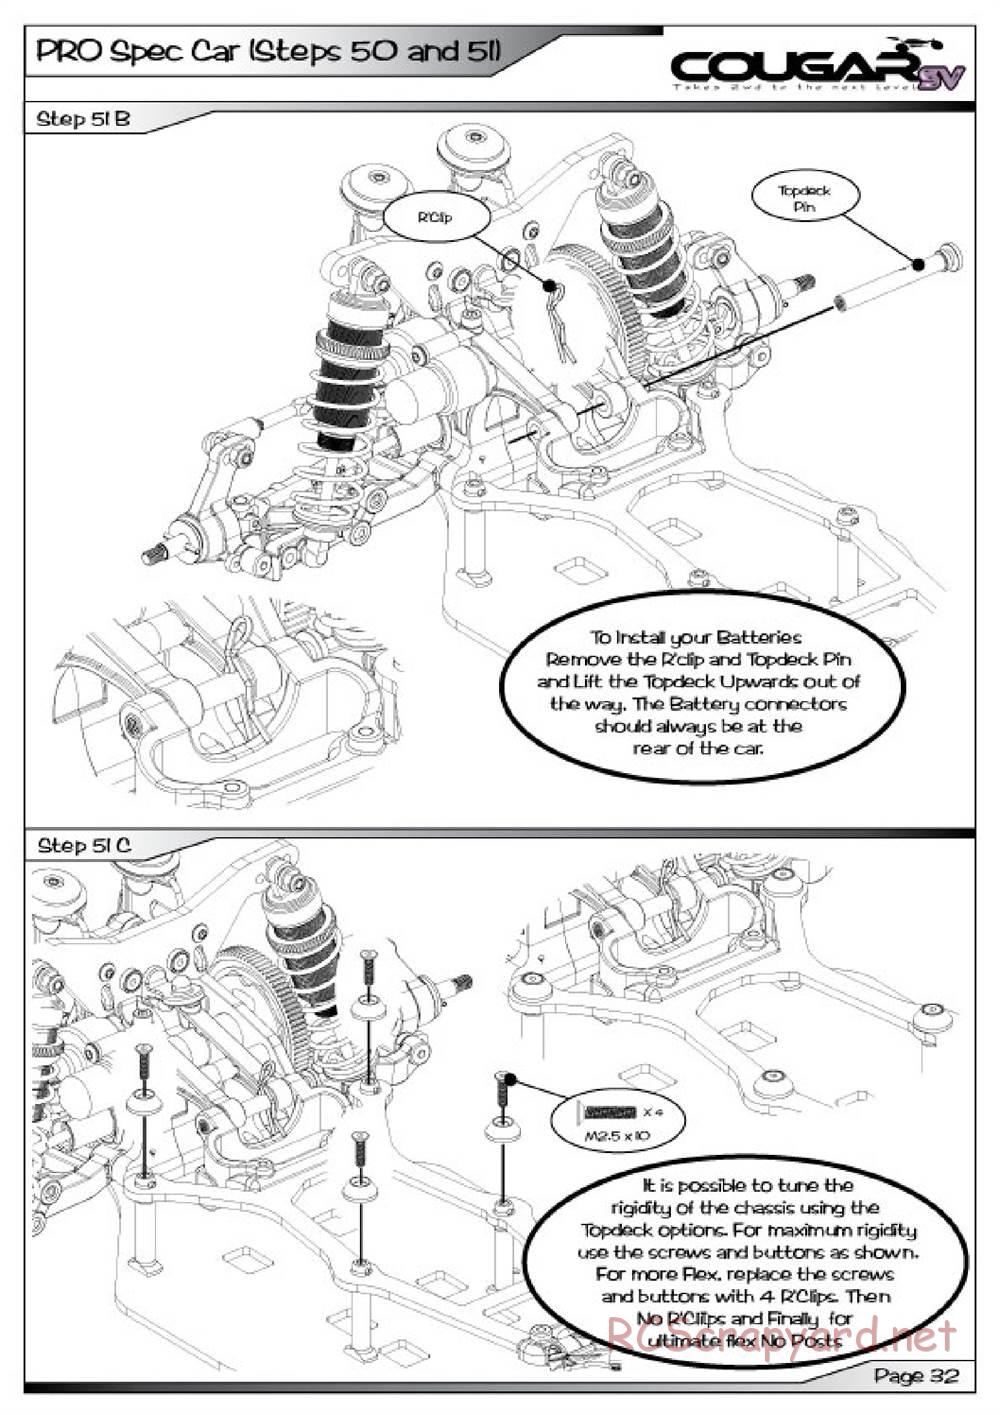 Schumacher - Cougar SV - Manual - Page 33